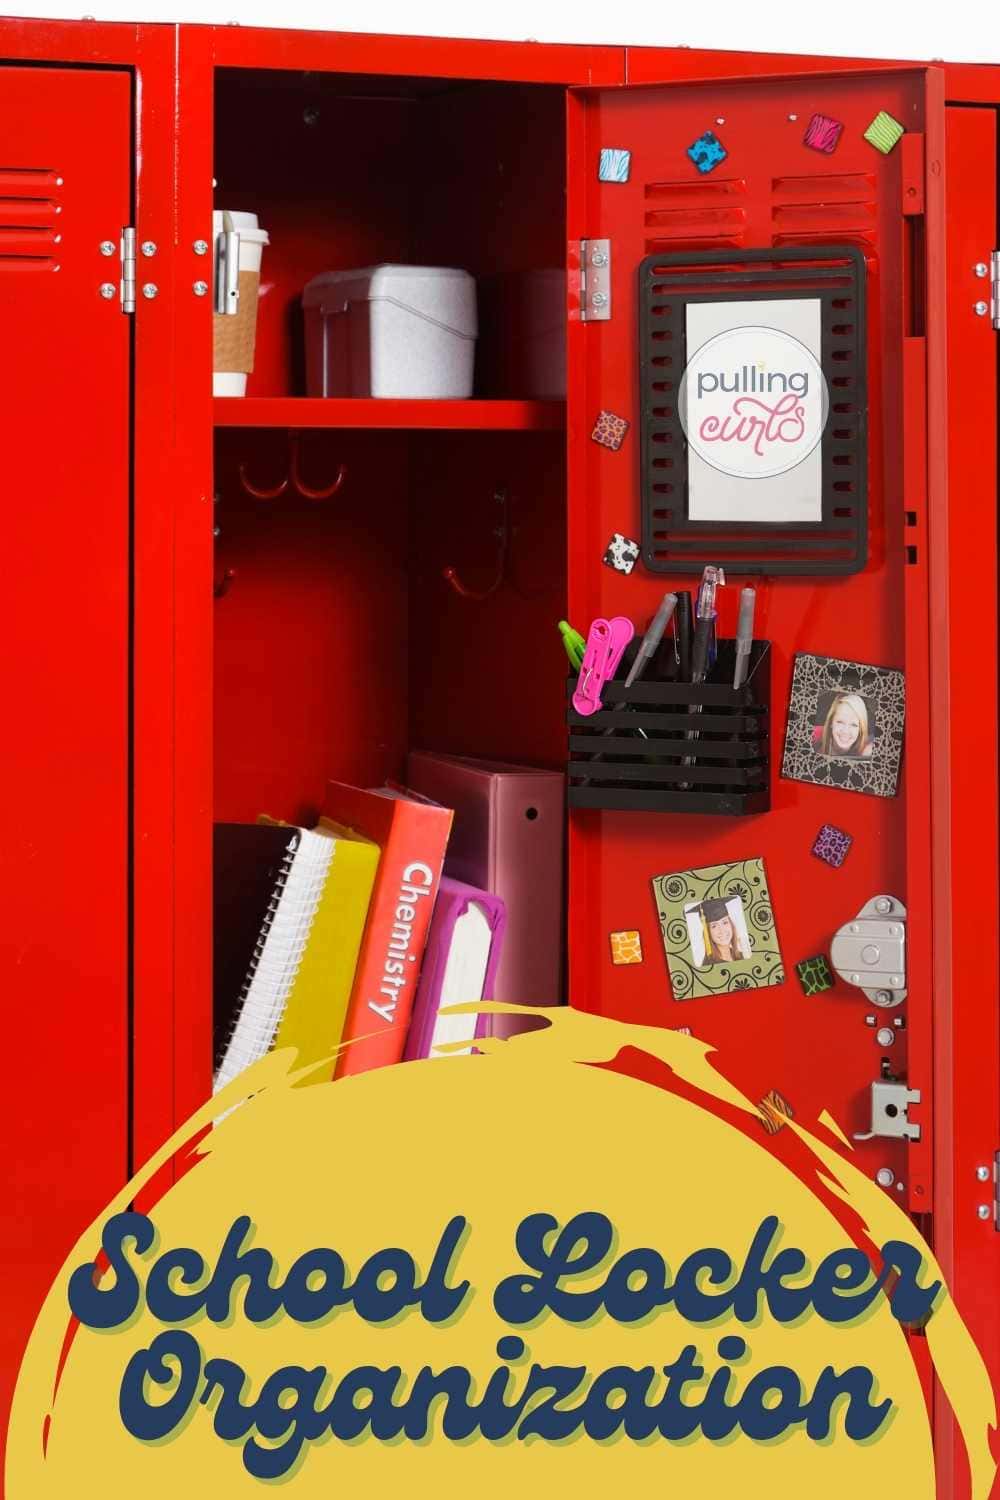 School locker organization, clean, red locker. via @pullingcurls